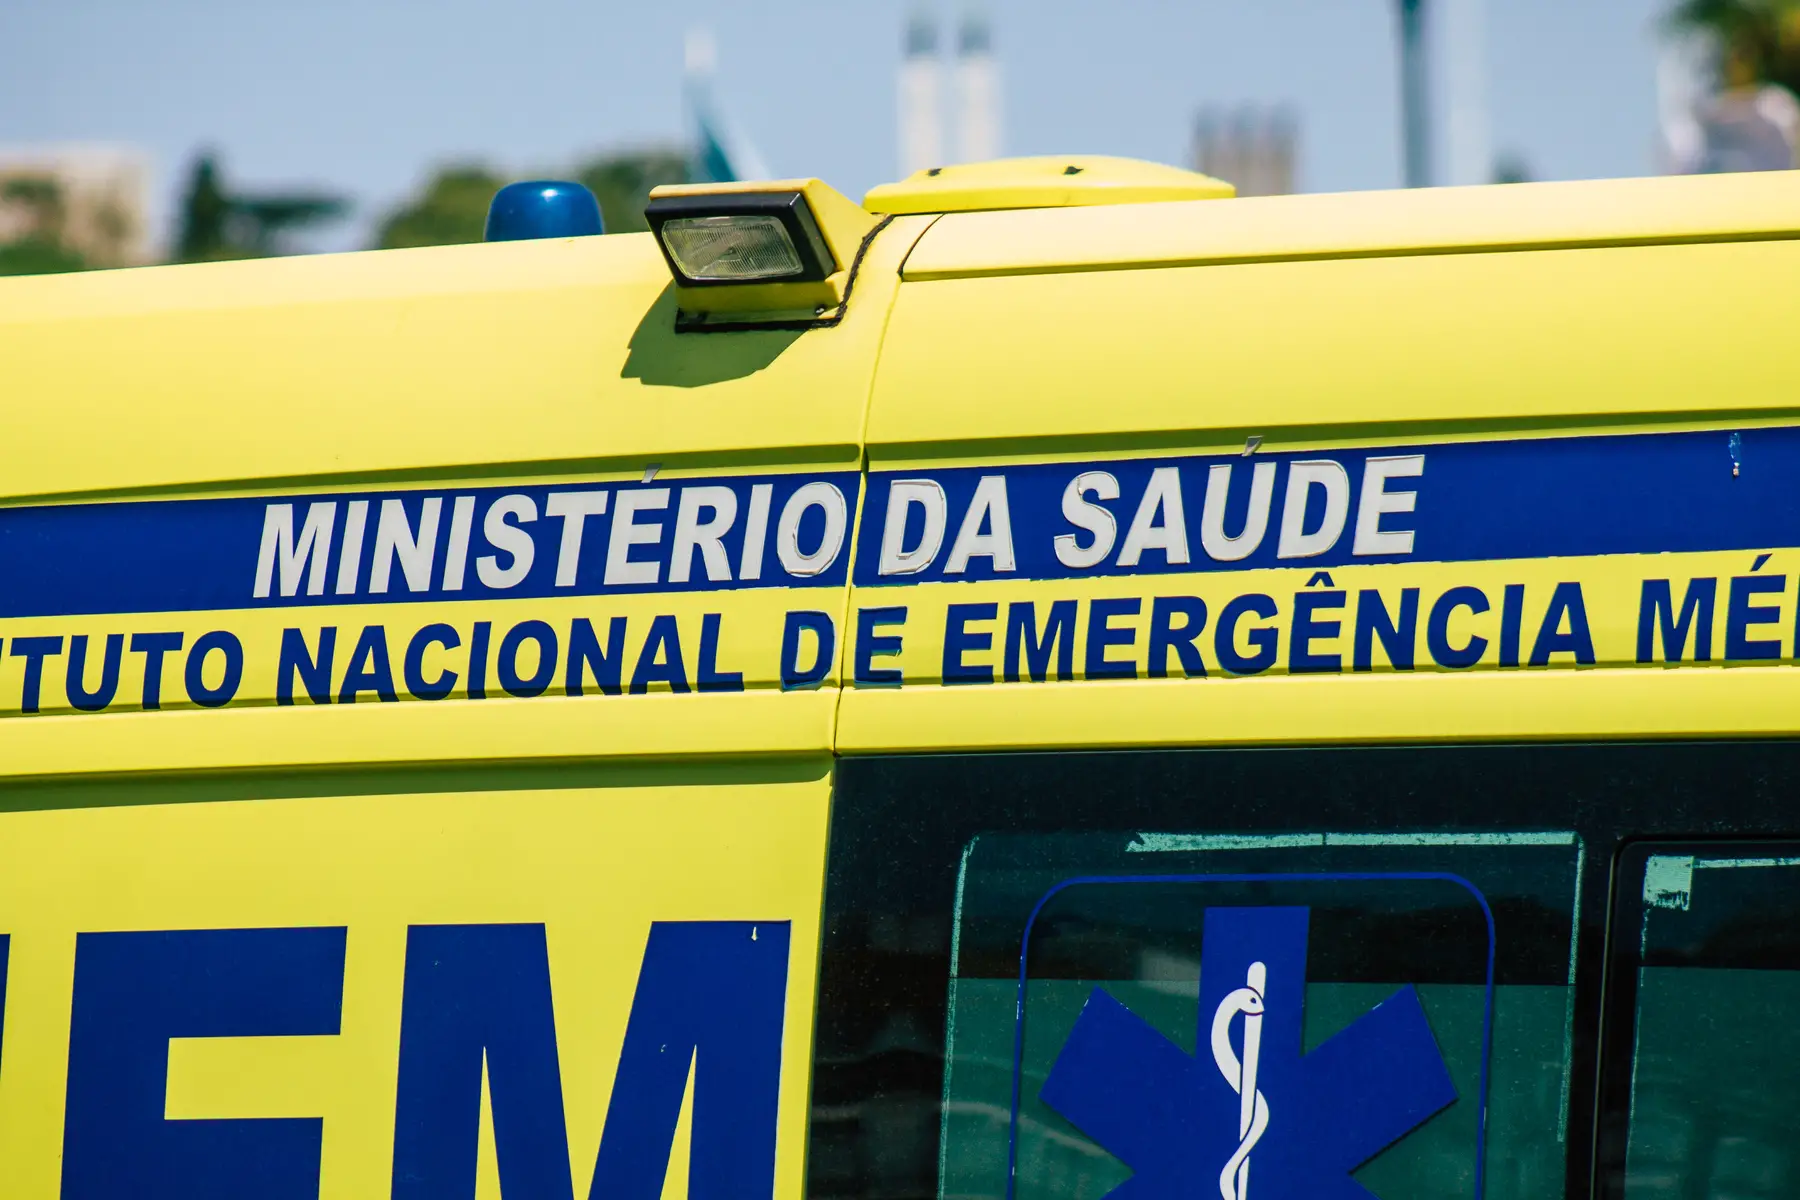 Ambulance in Lisbon, Portugal